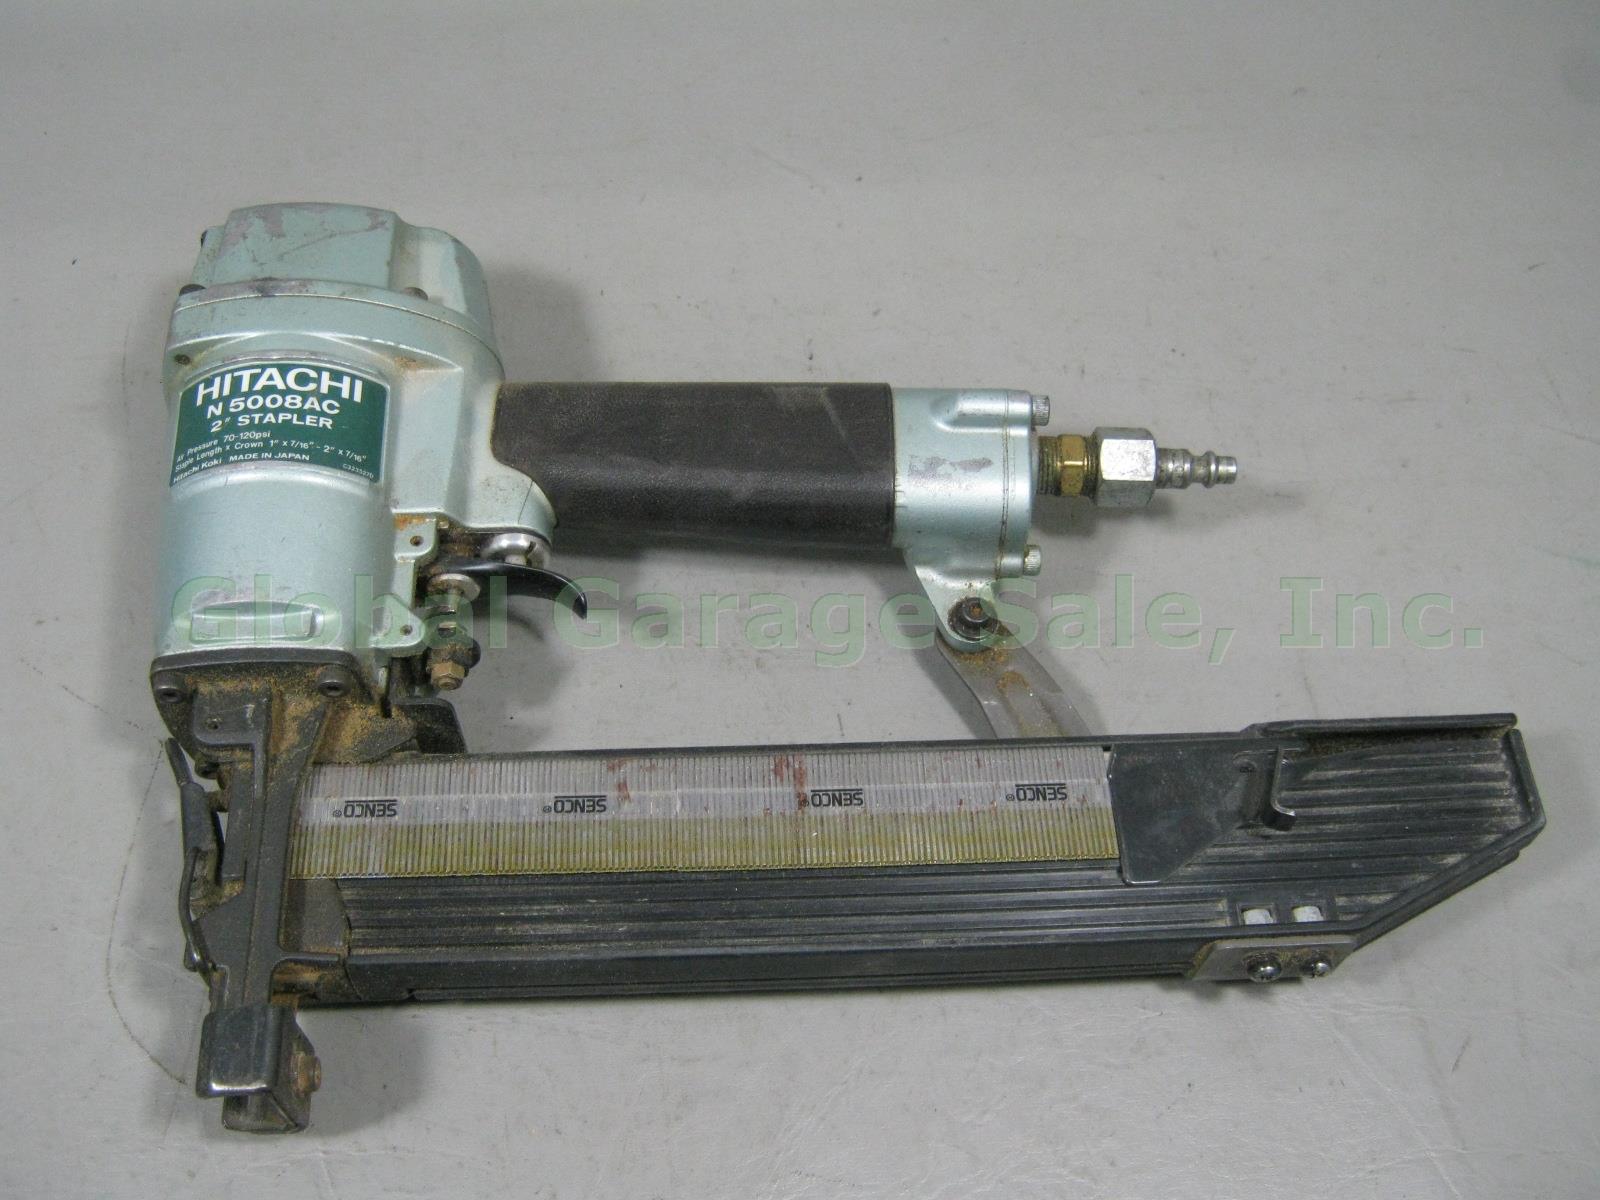 Hitachi N5008AC Construction Stapler Standard 16 Gauge Crown 1" x 7/16" - 2" NR! 1